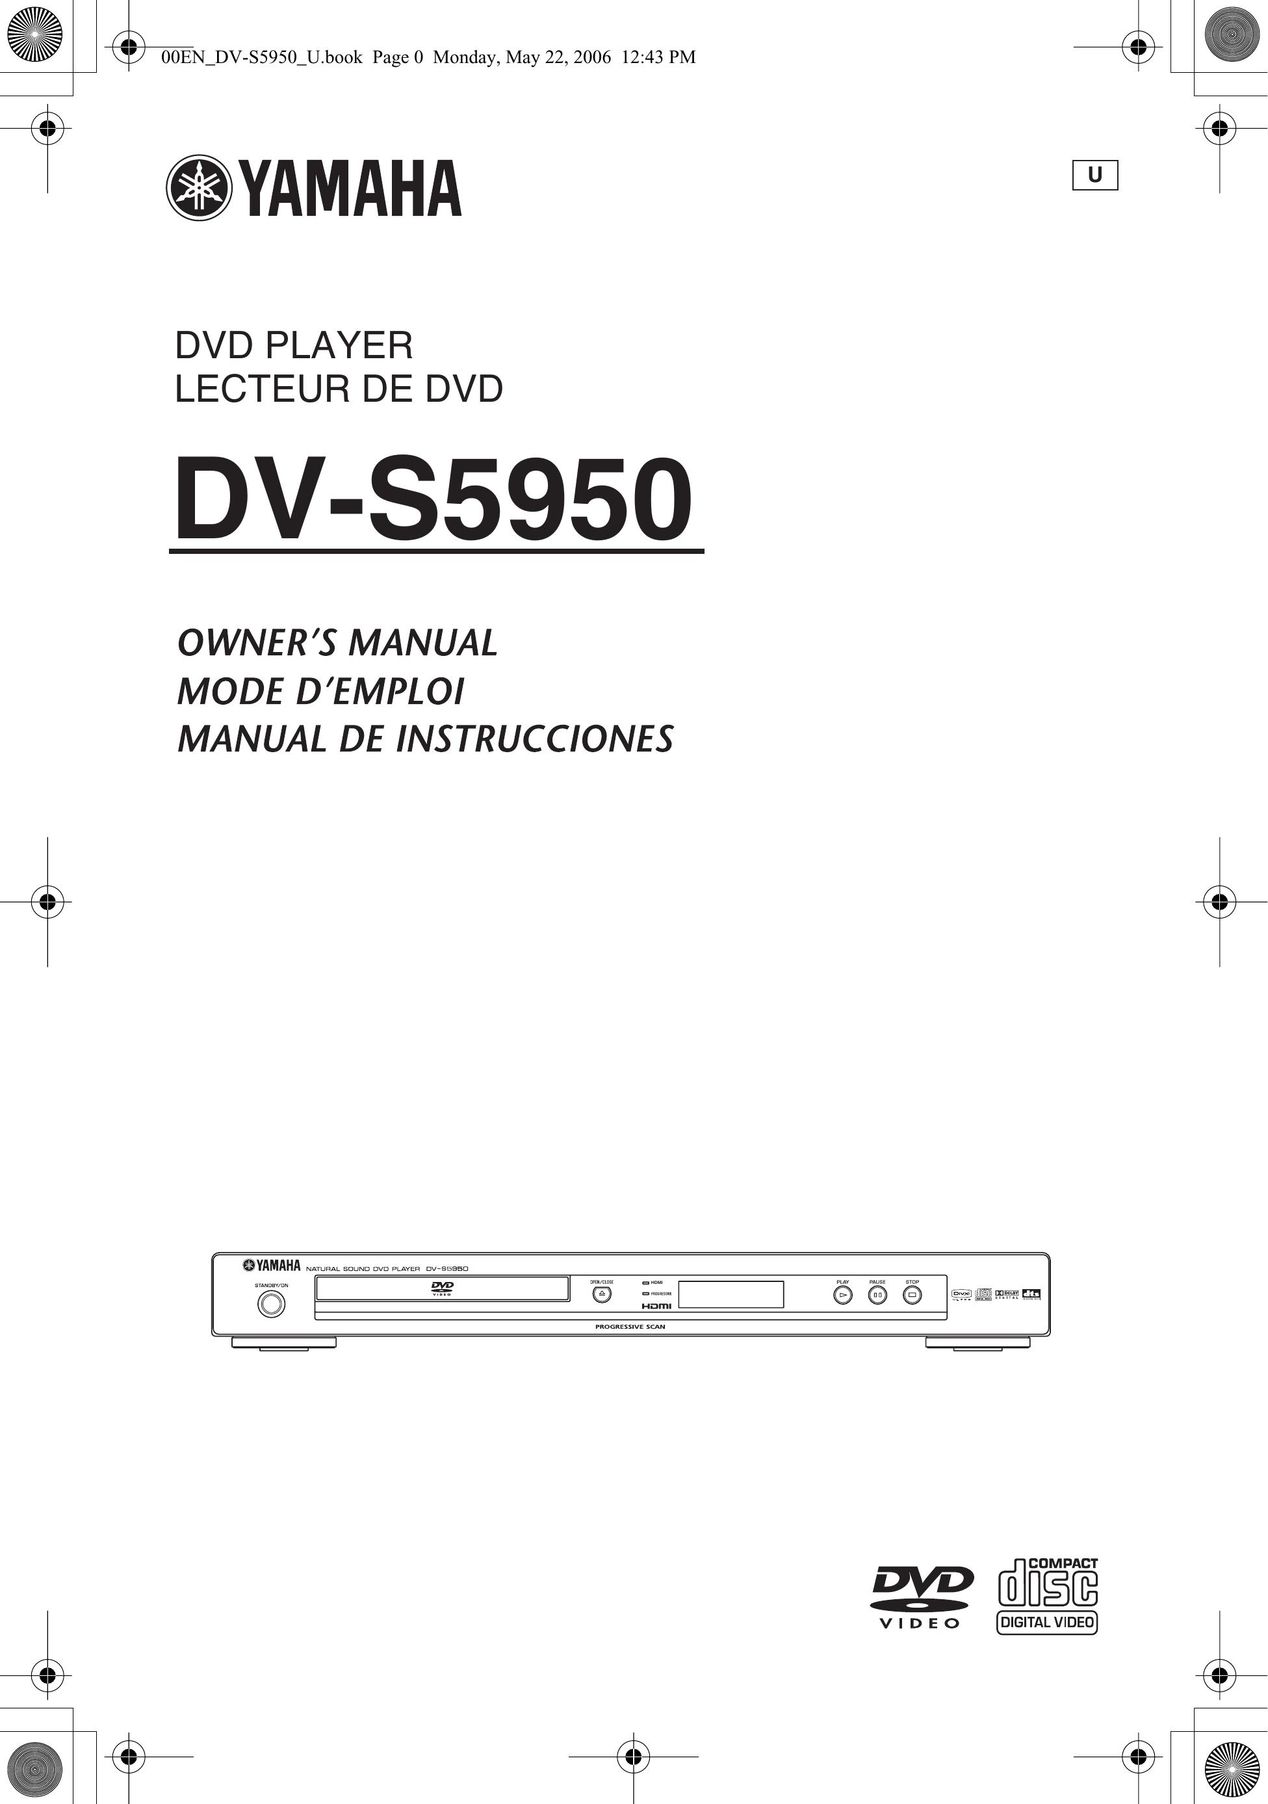 Yamaha DV-S5950 DVD Player User Manual